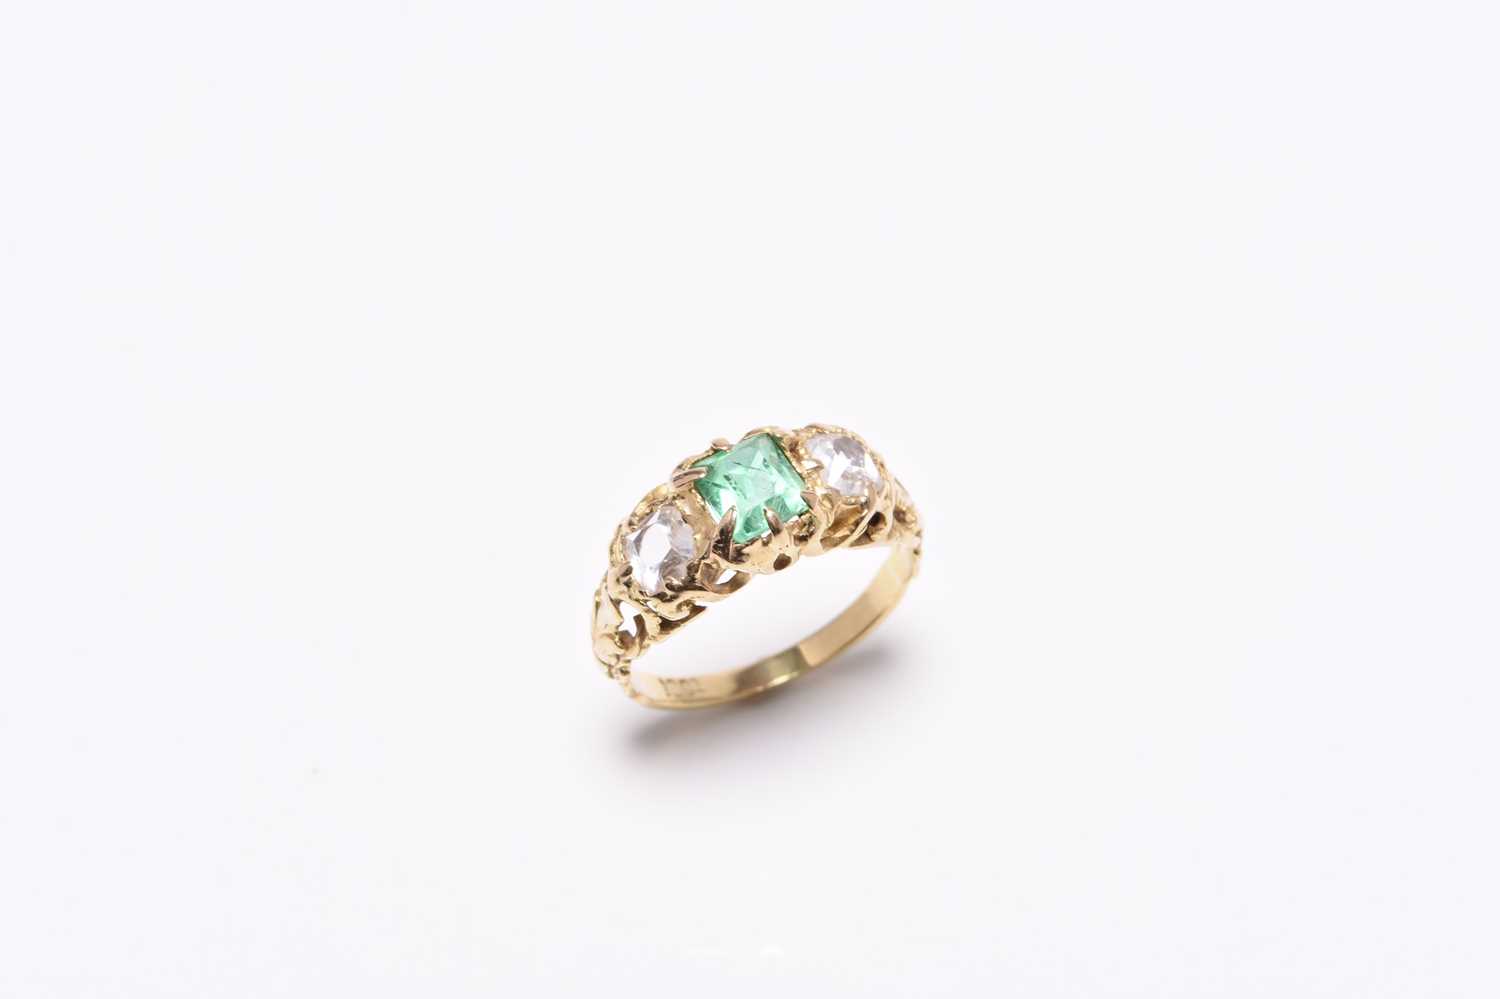 A late 19th century three stone emerald and diamond ring